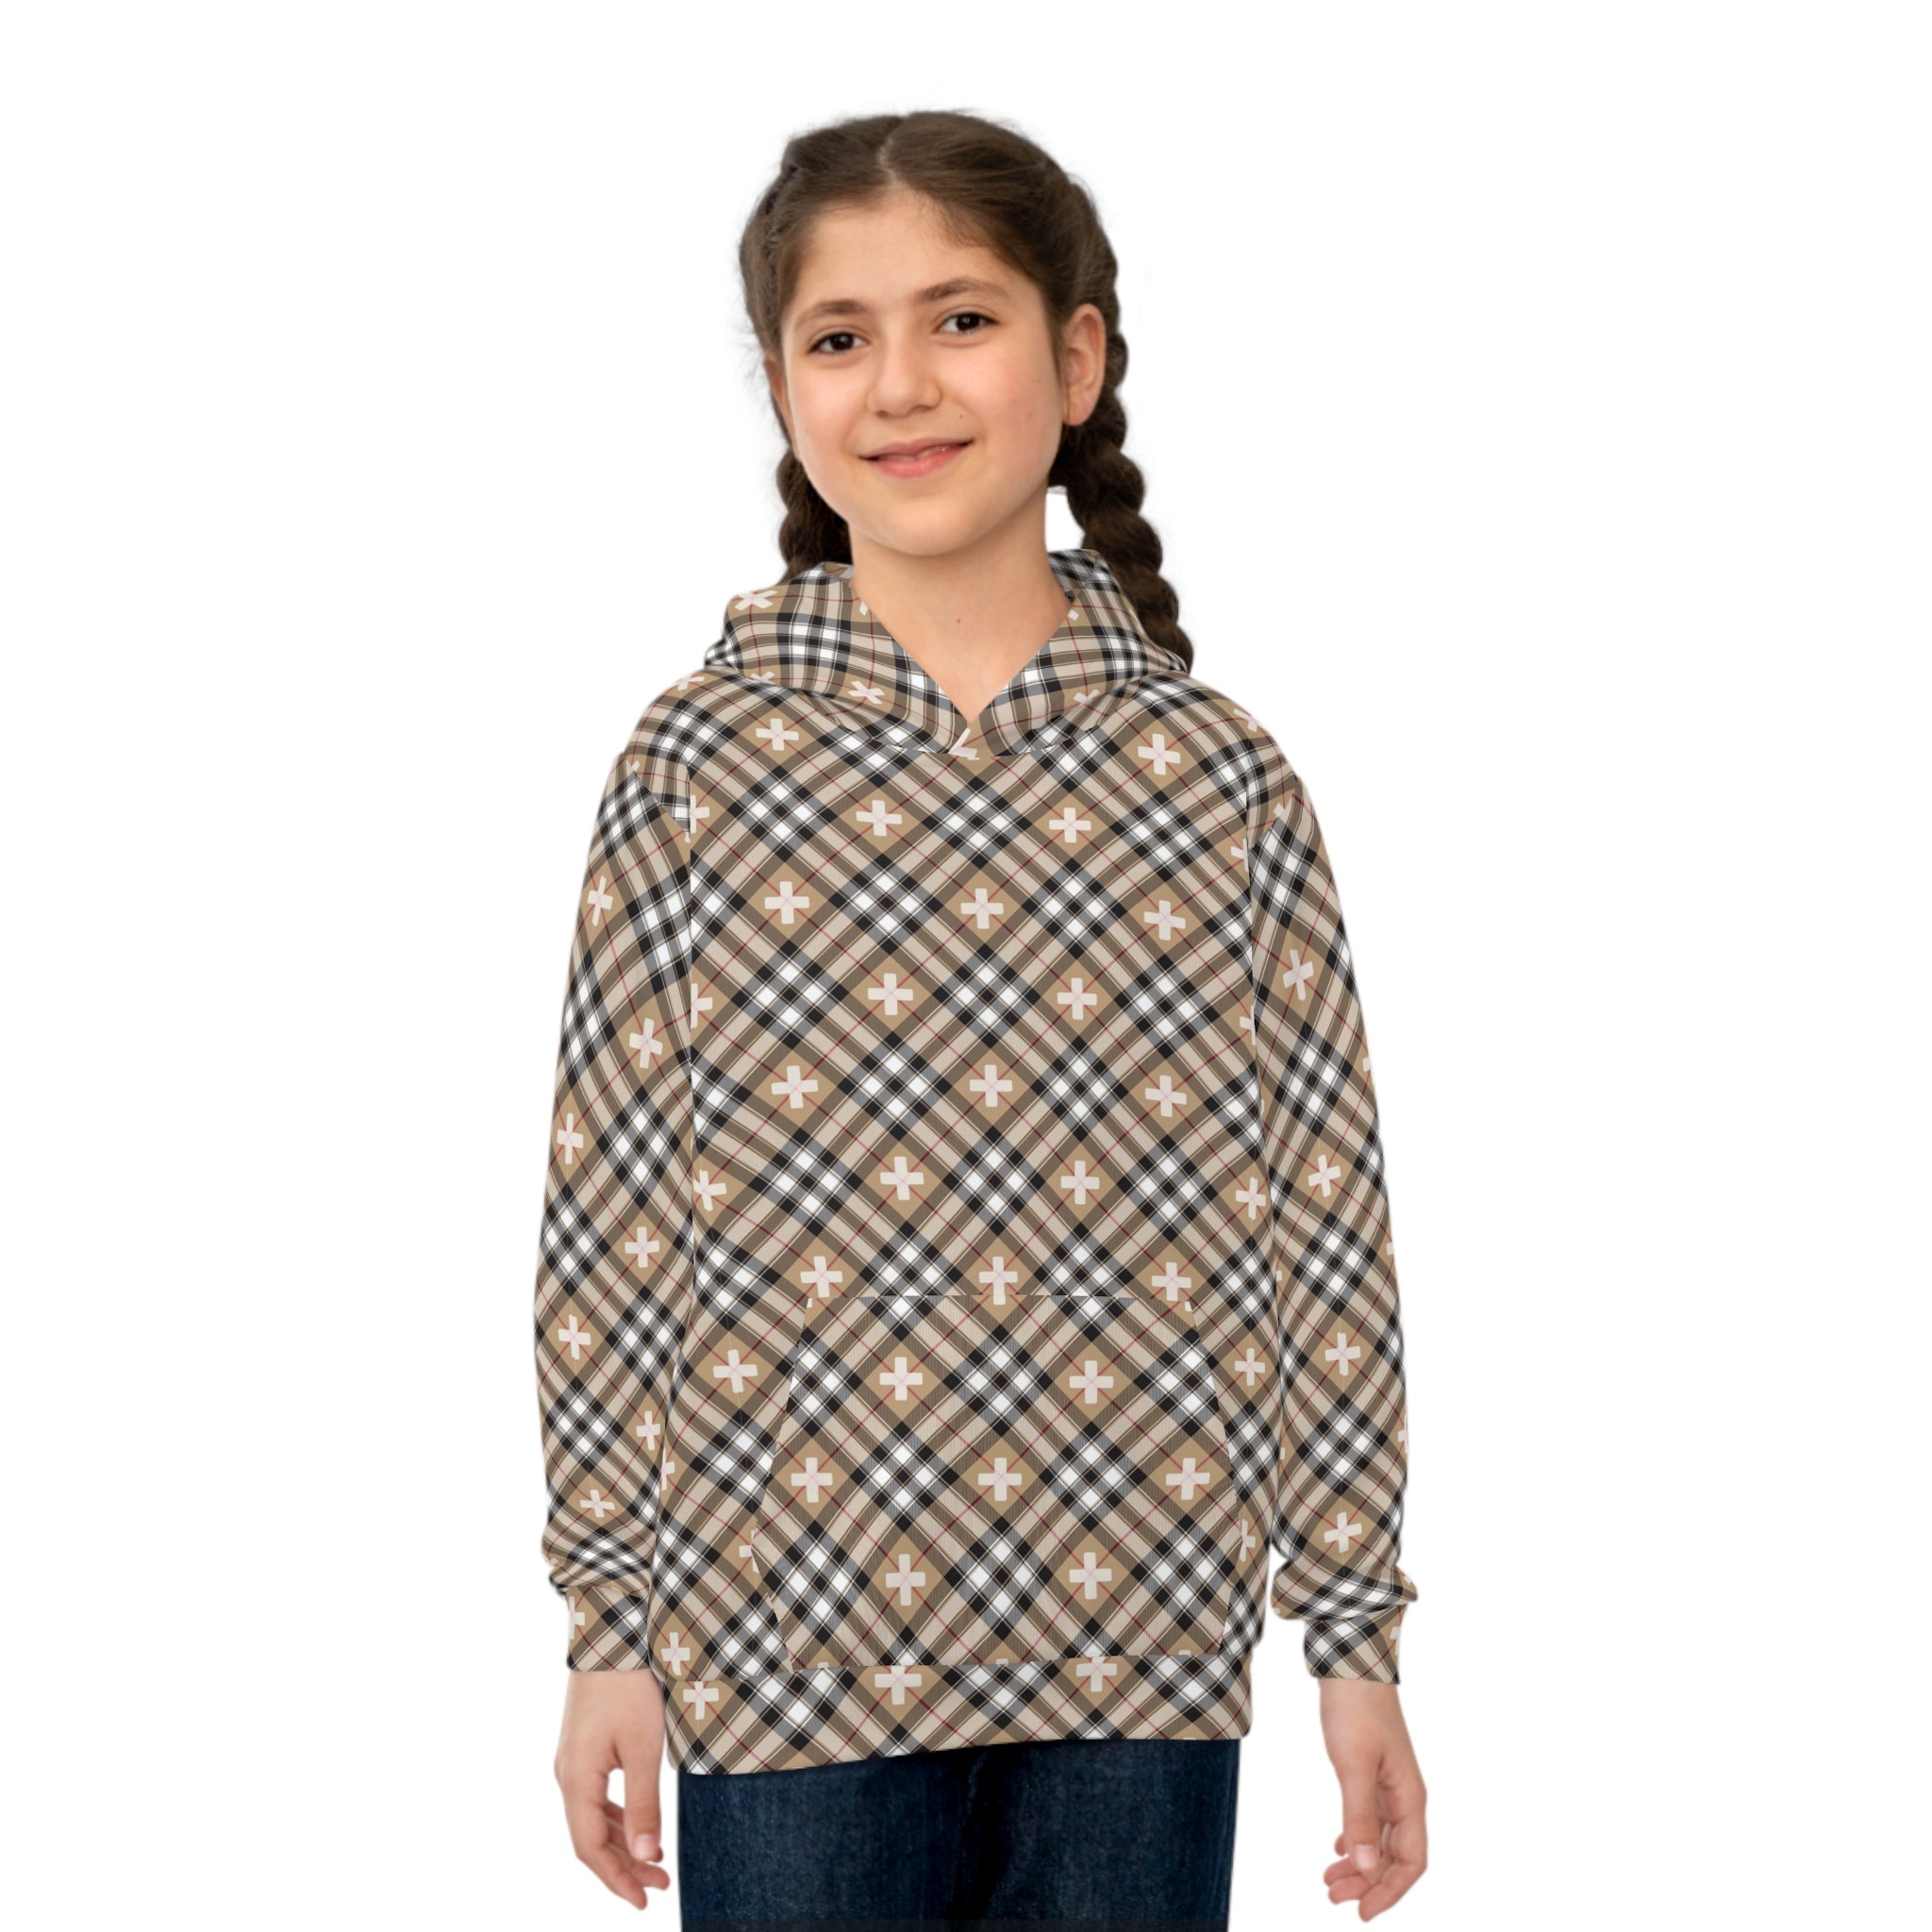  Beige Plaid Plus Sign Children's Hoodie, Pullover Sweater for Children, Kids Fashion Wear All Over PrintsXL